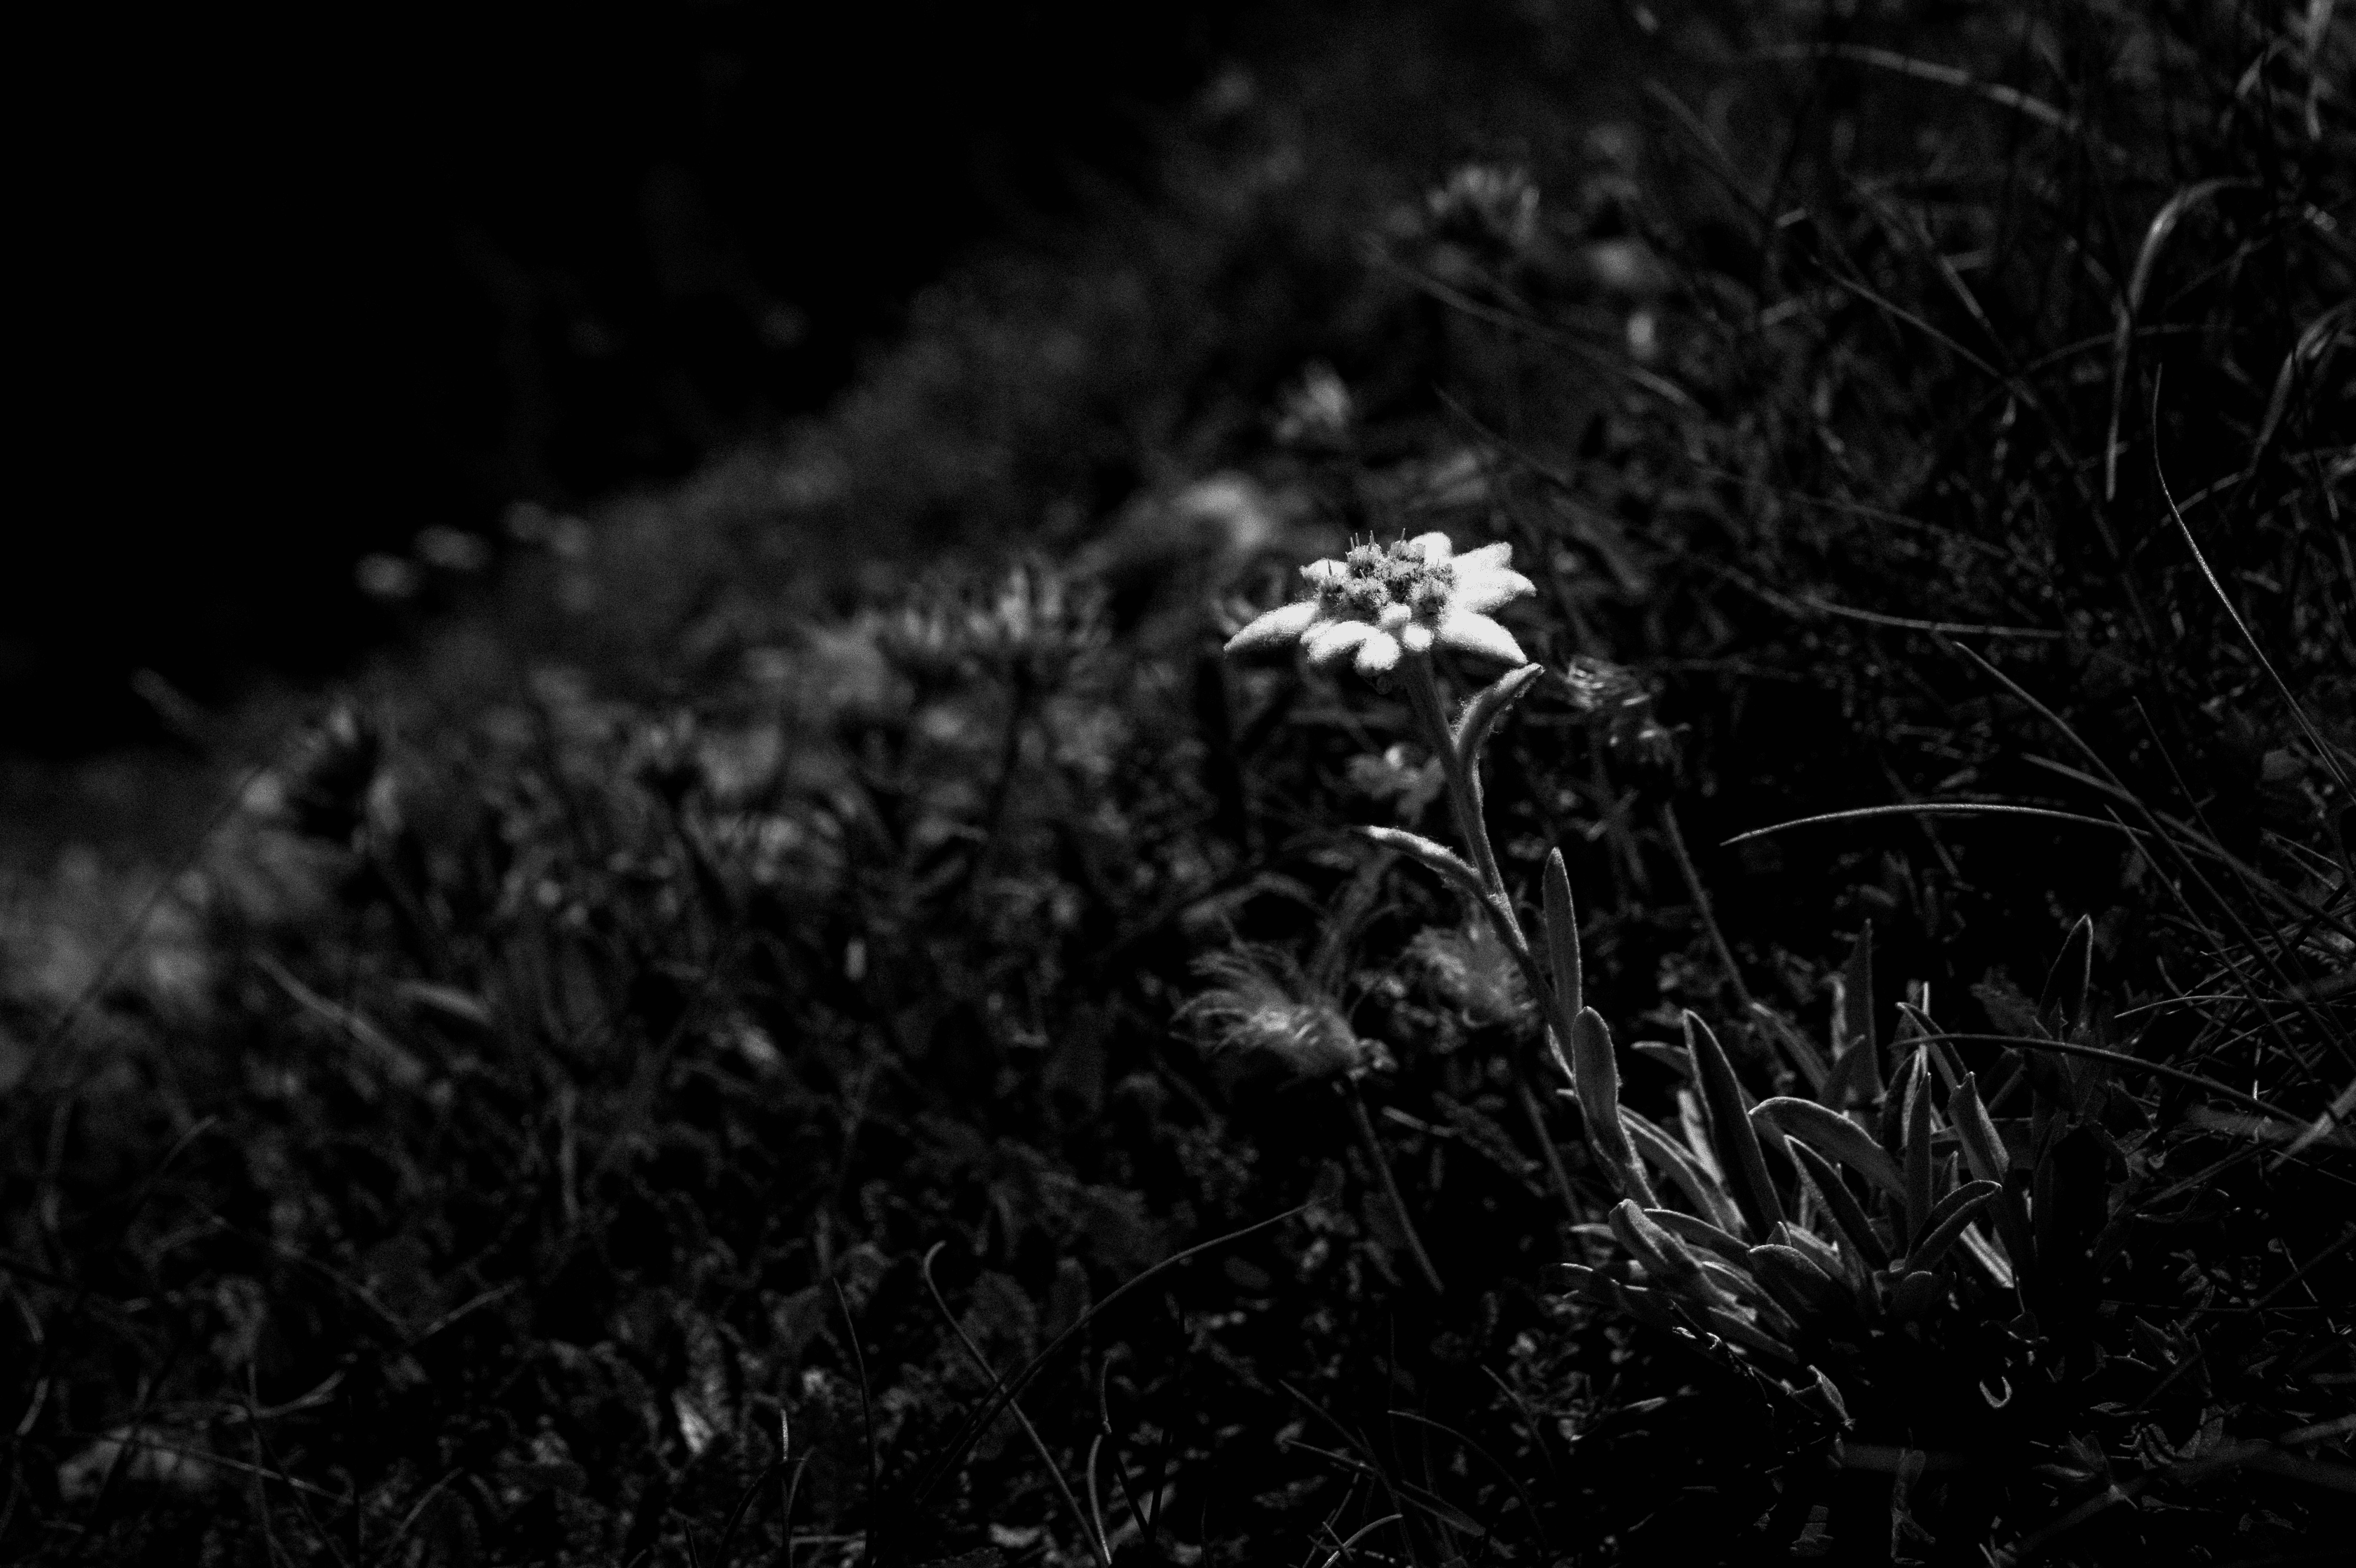 Edelweiss, queen of flowers #05